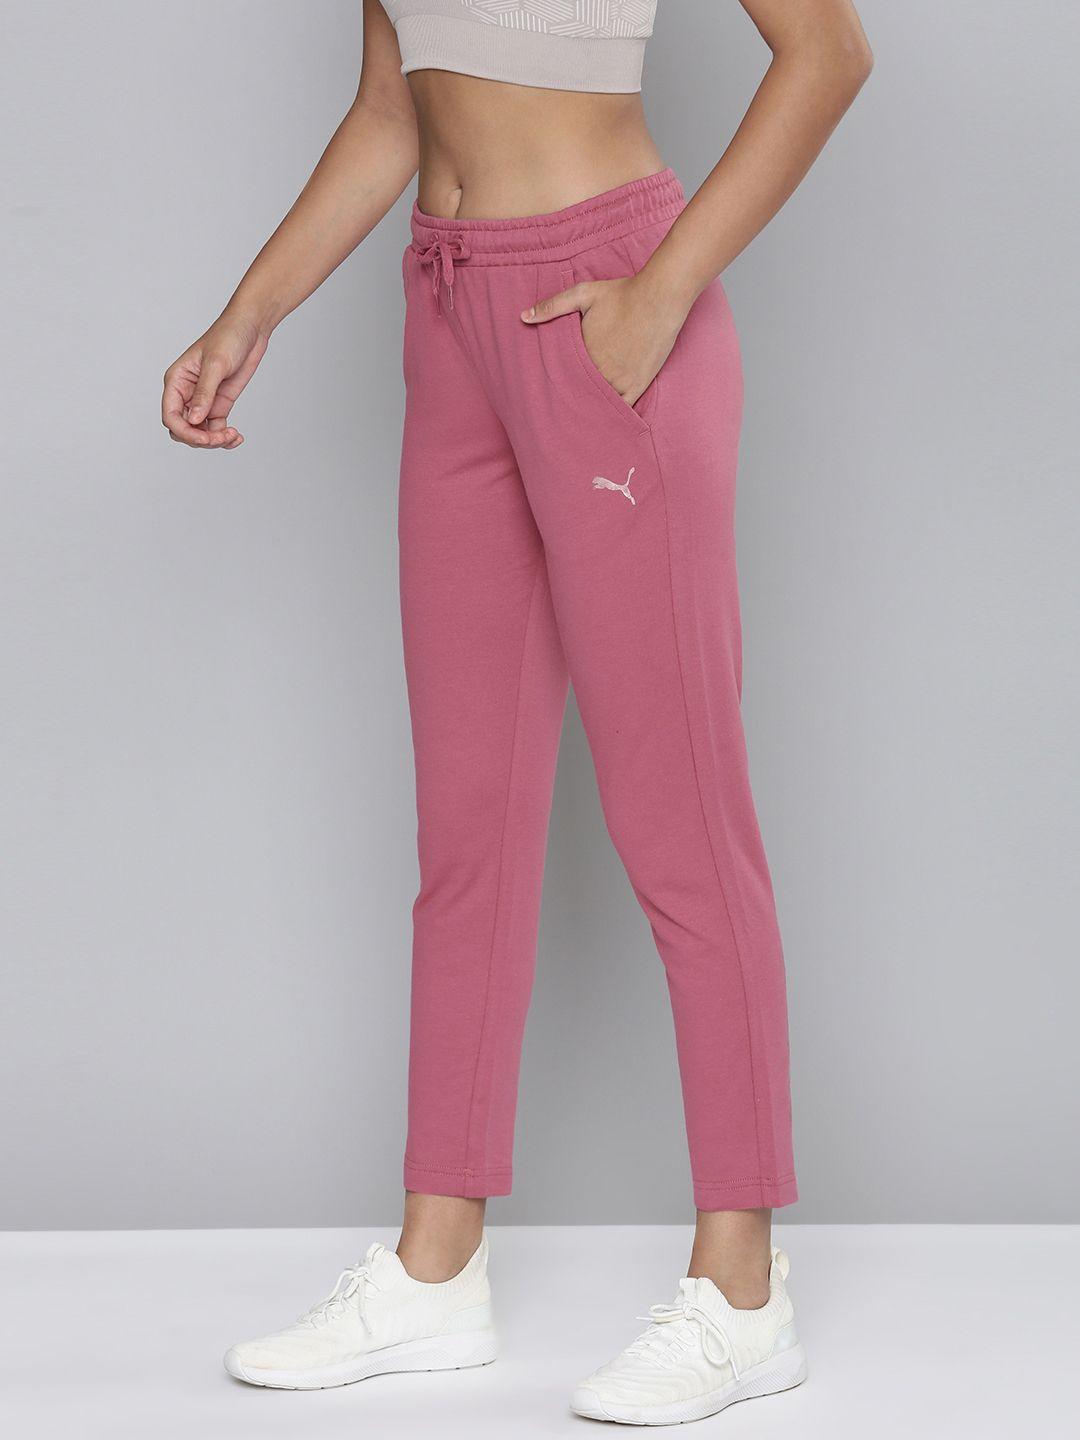 puma-women-pink-brand-logo-printed-7/8-regular-fit-knitted-track-pants